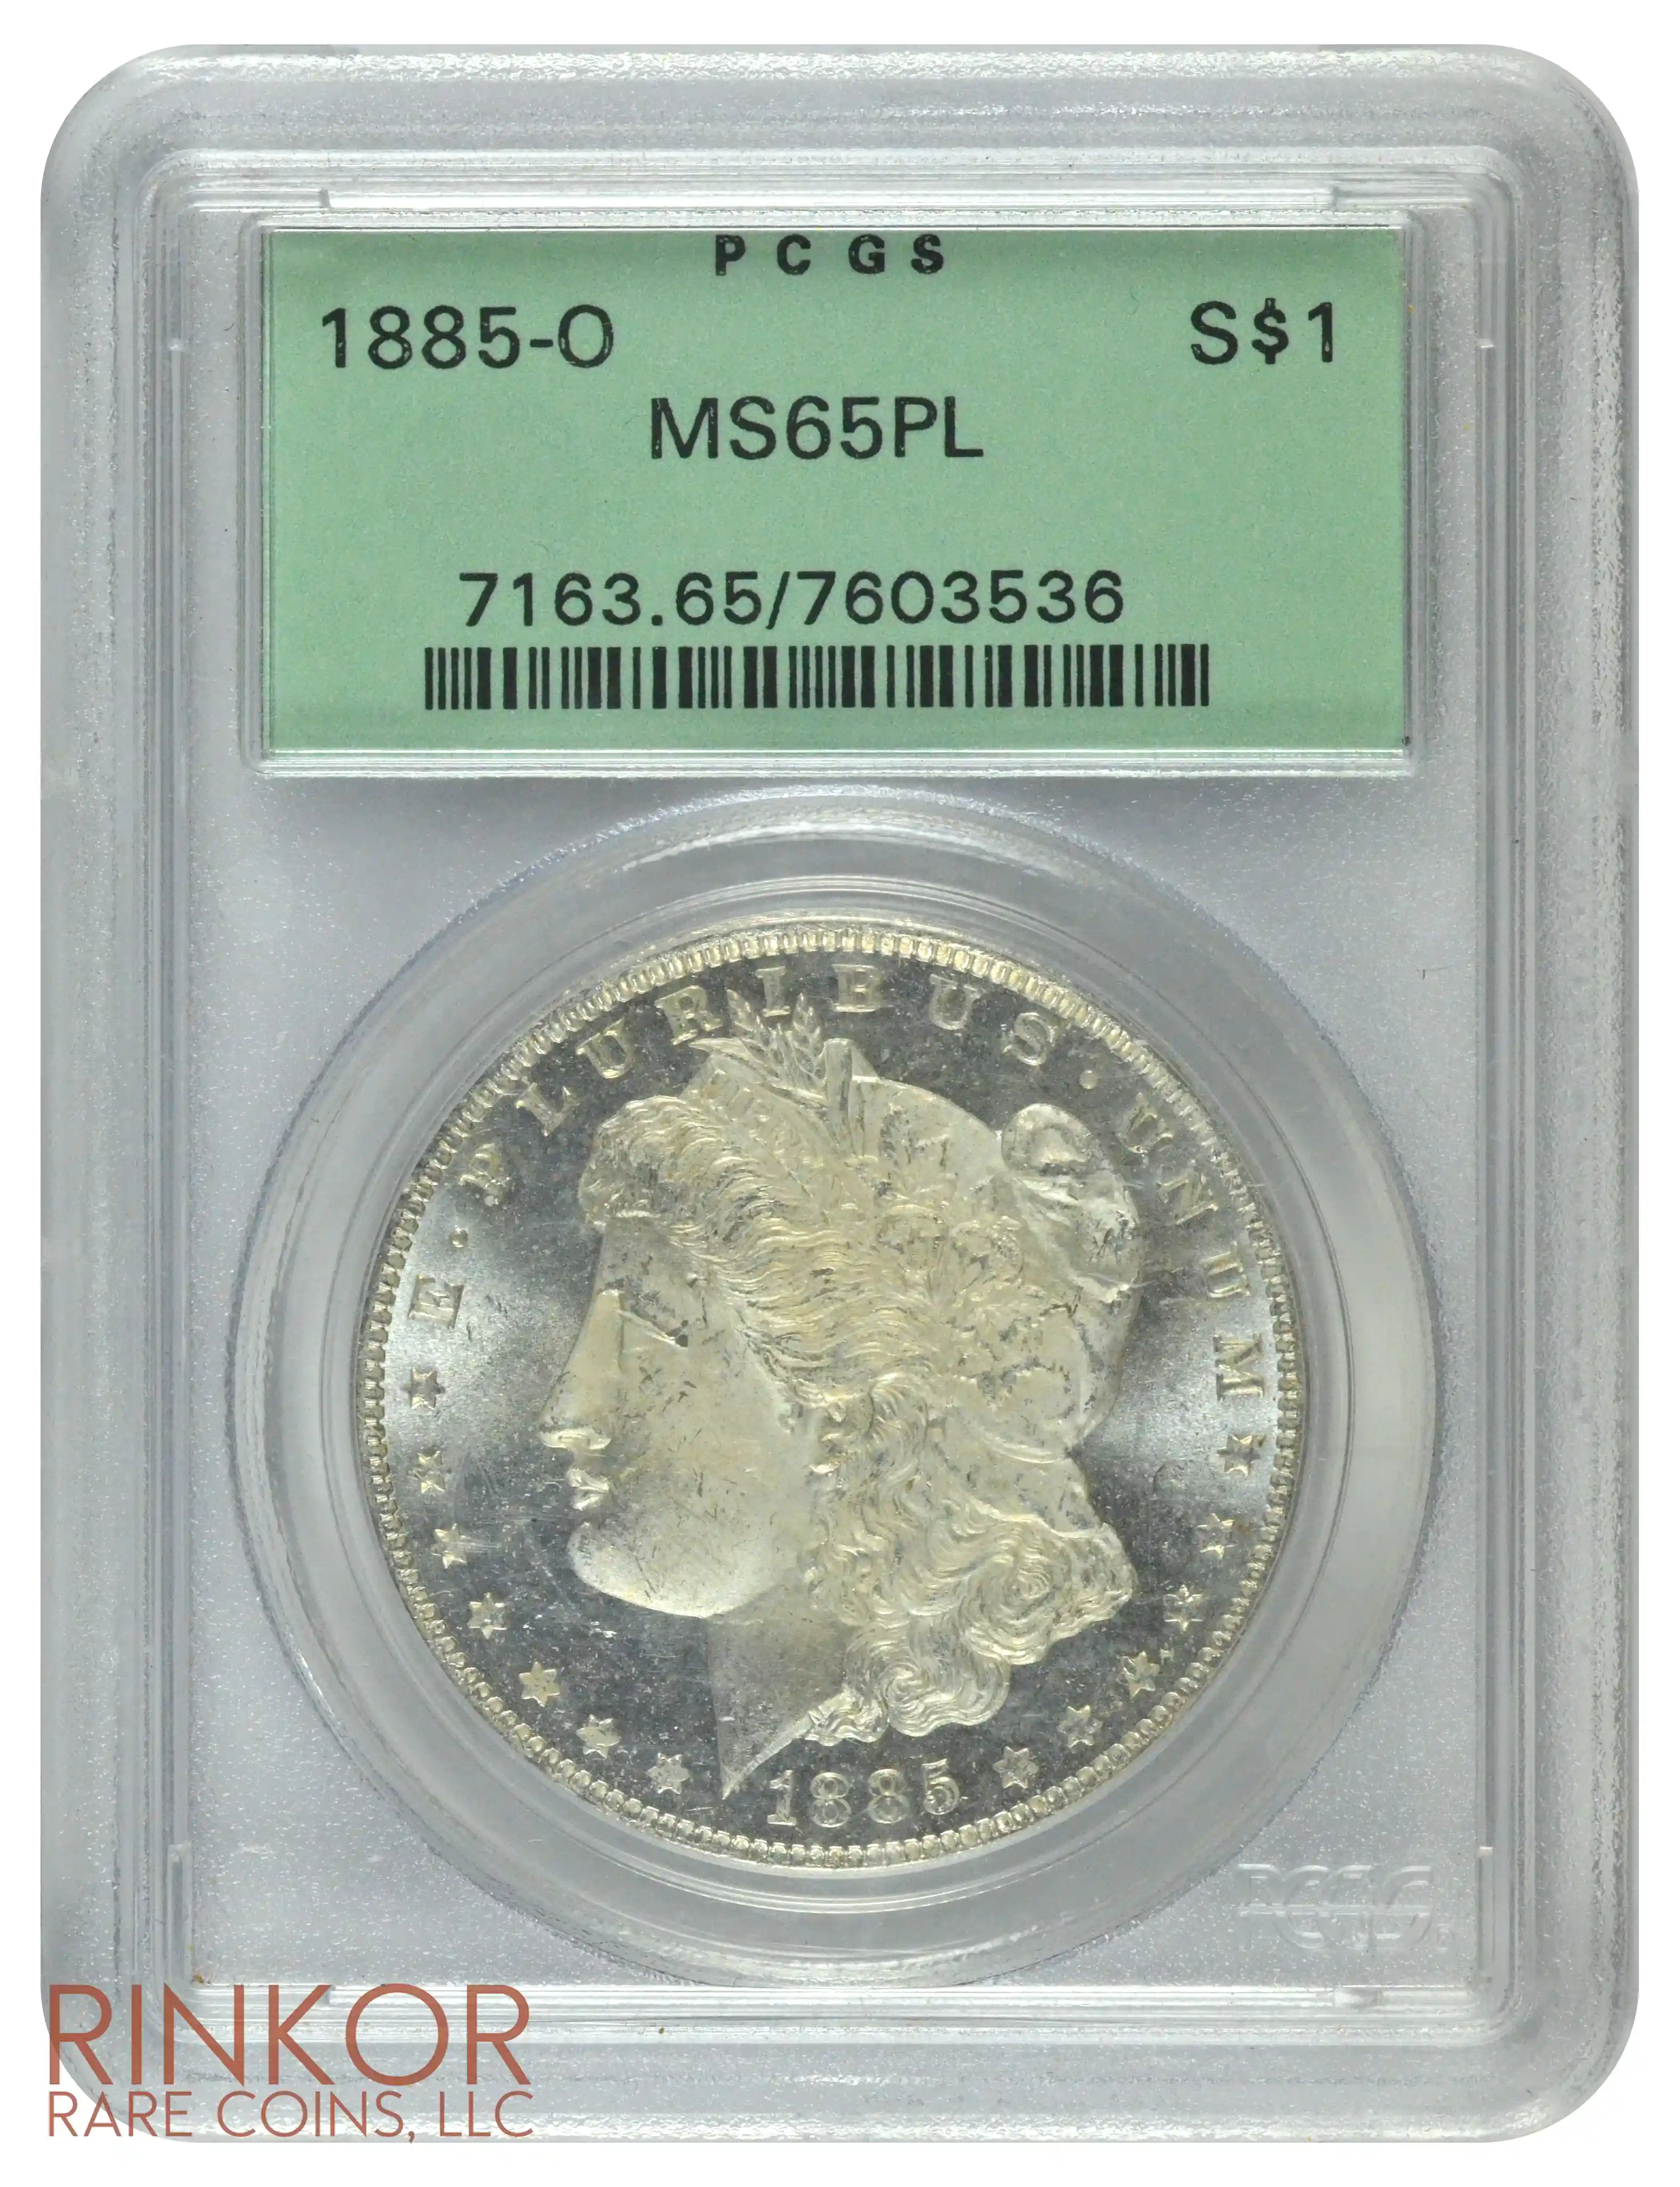 1885-O $1 PCGS MS 65 PL